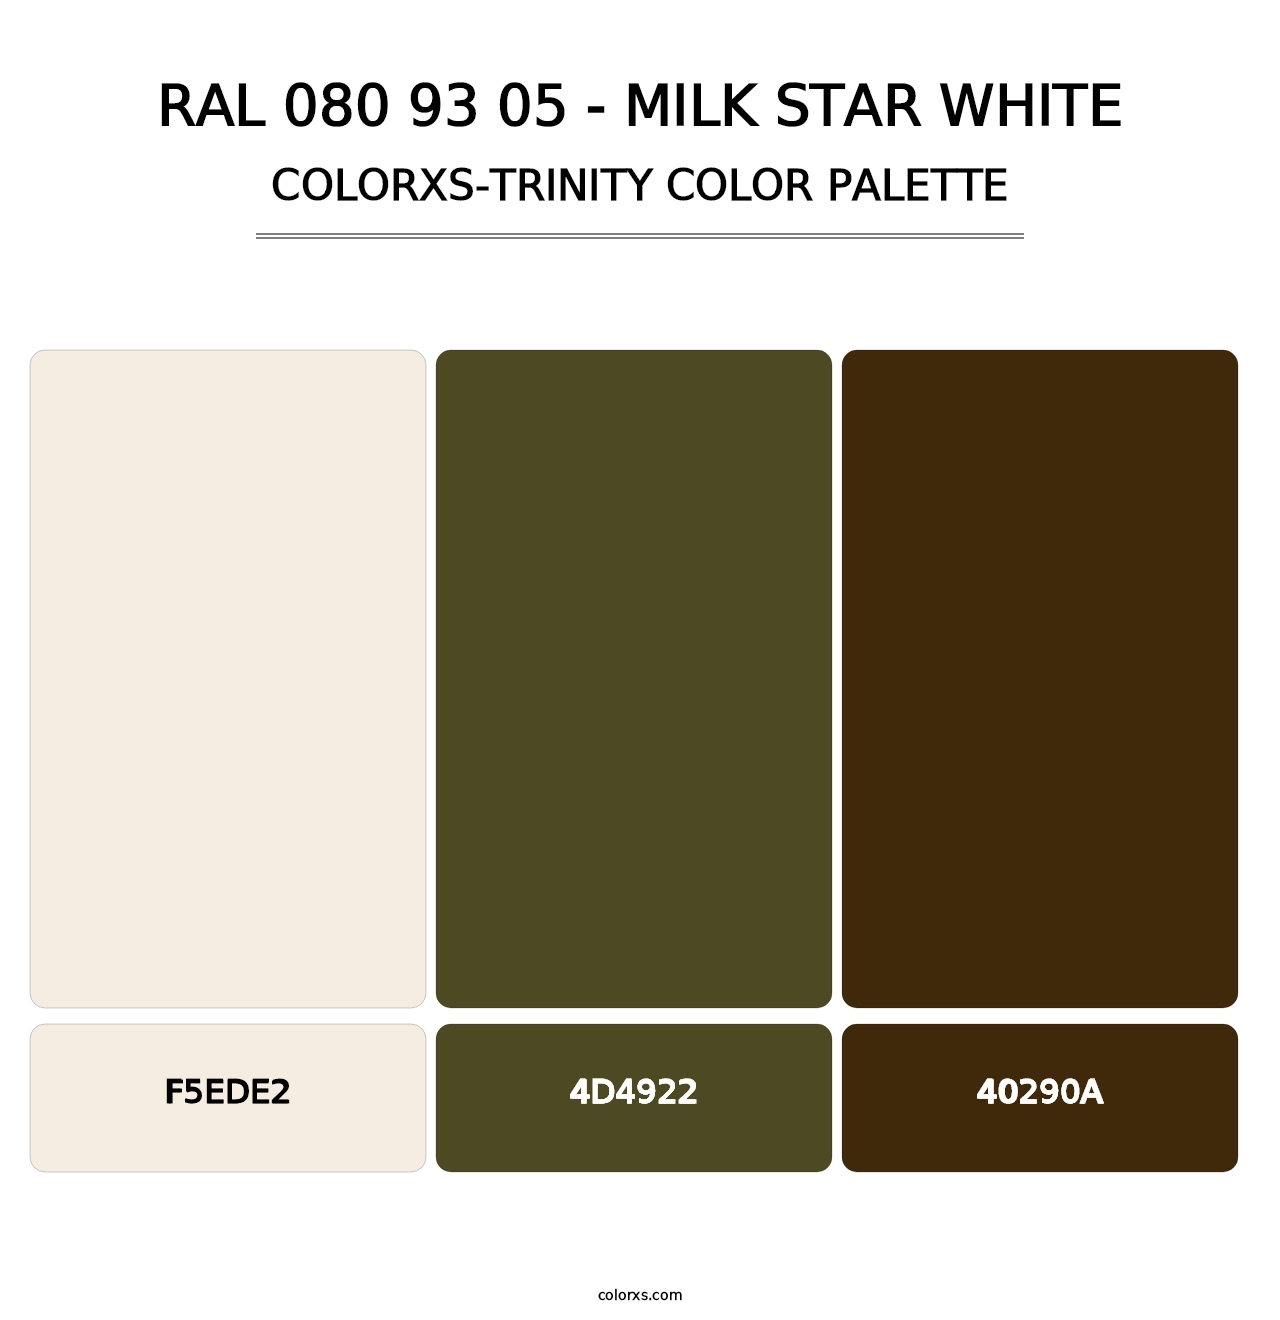 RAL 080 93 05 - Milk Star White - Colorxs Trinity Palette